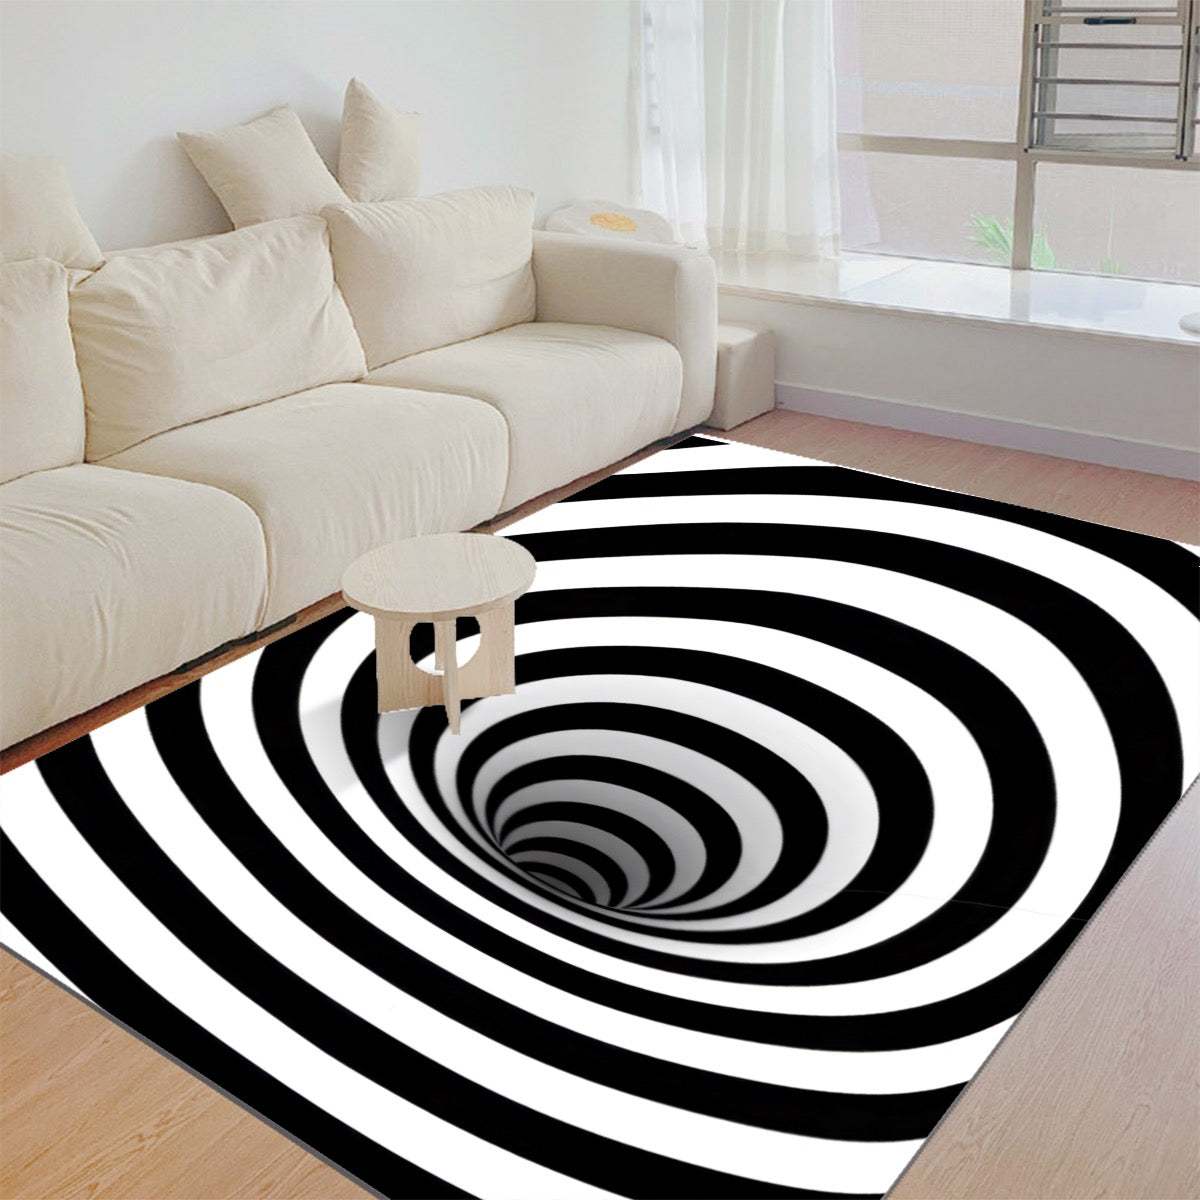 Optical Illusion #2 Floor Mat - Posterify